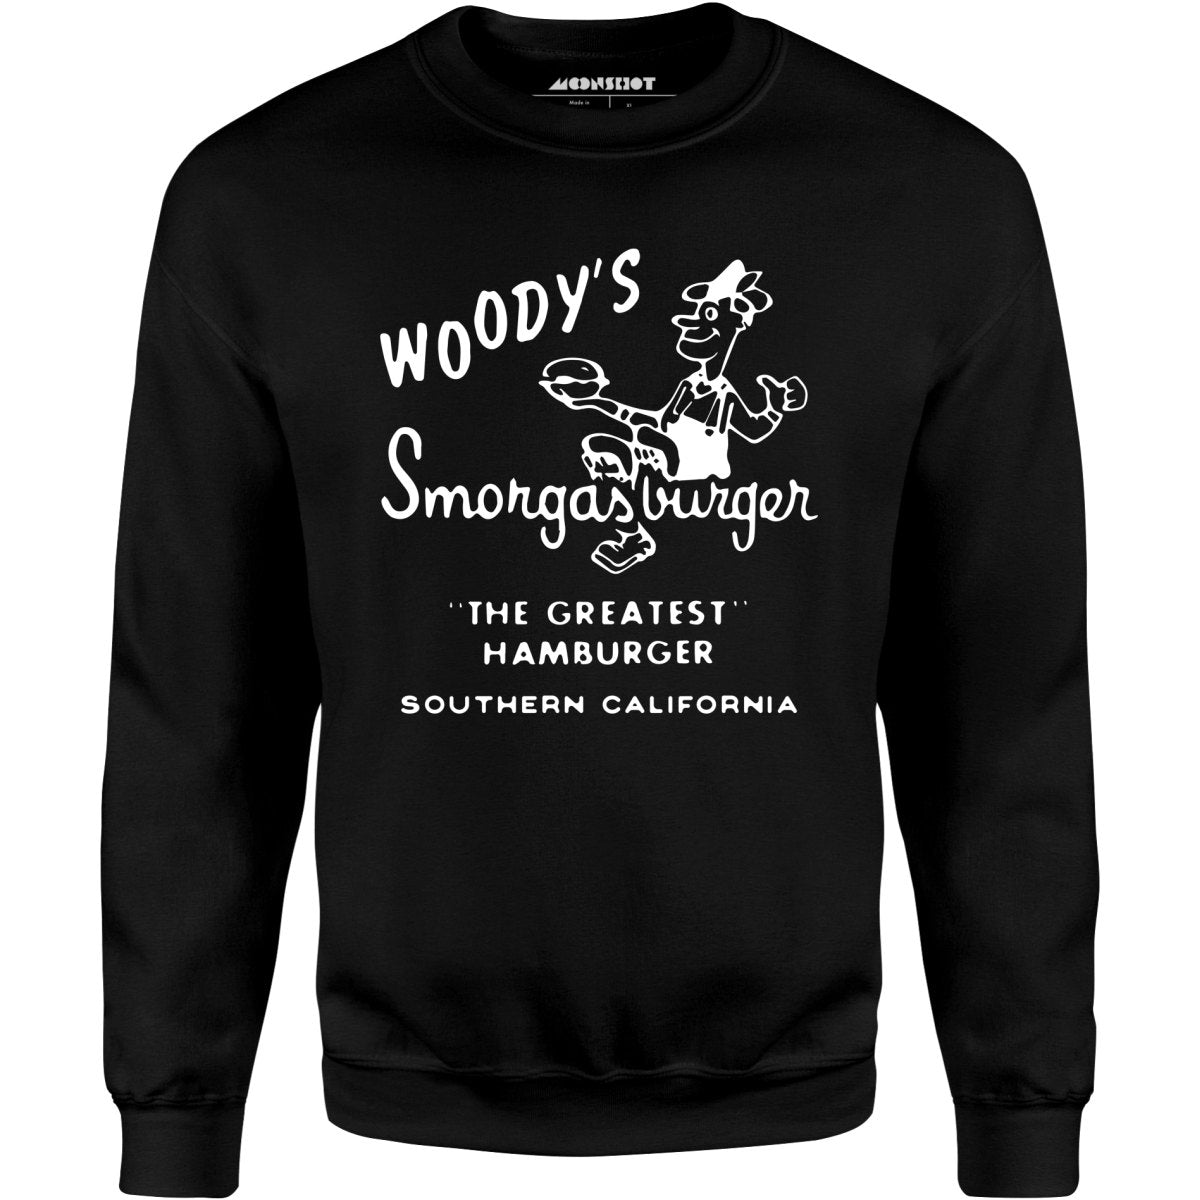 Woody's Smorgasburger - California - Vintage Restaurant - Unisex Sweatshirt